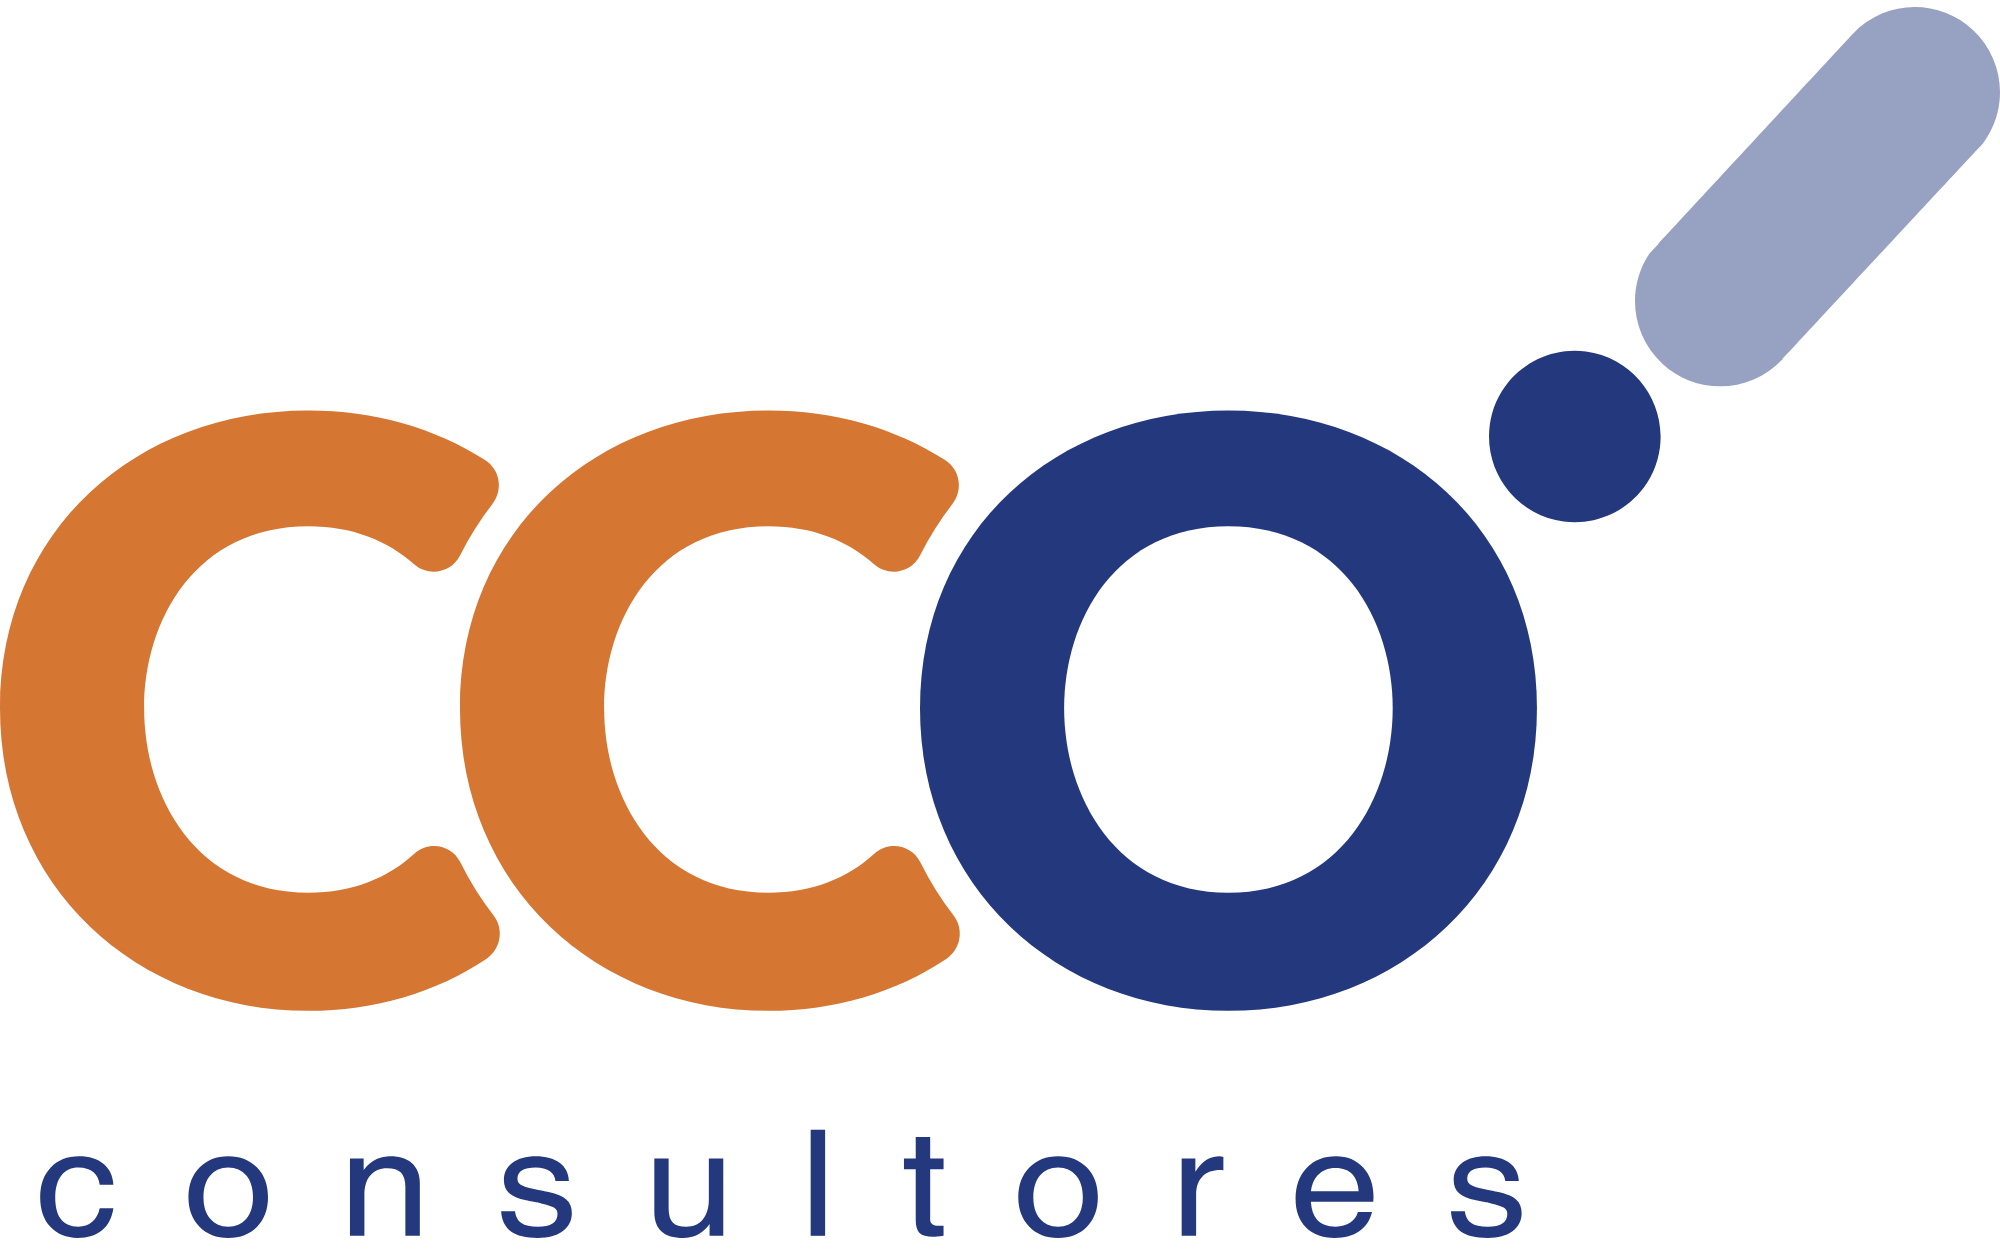 CCO Consultores